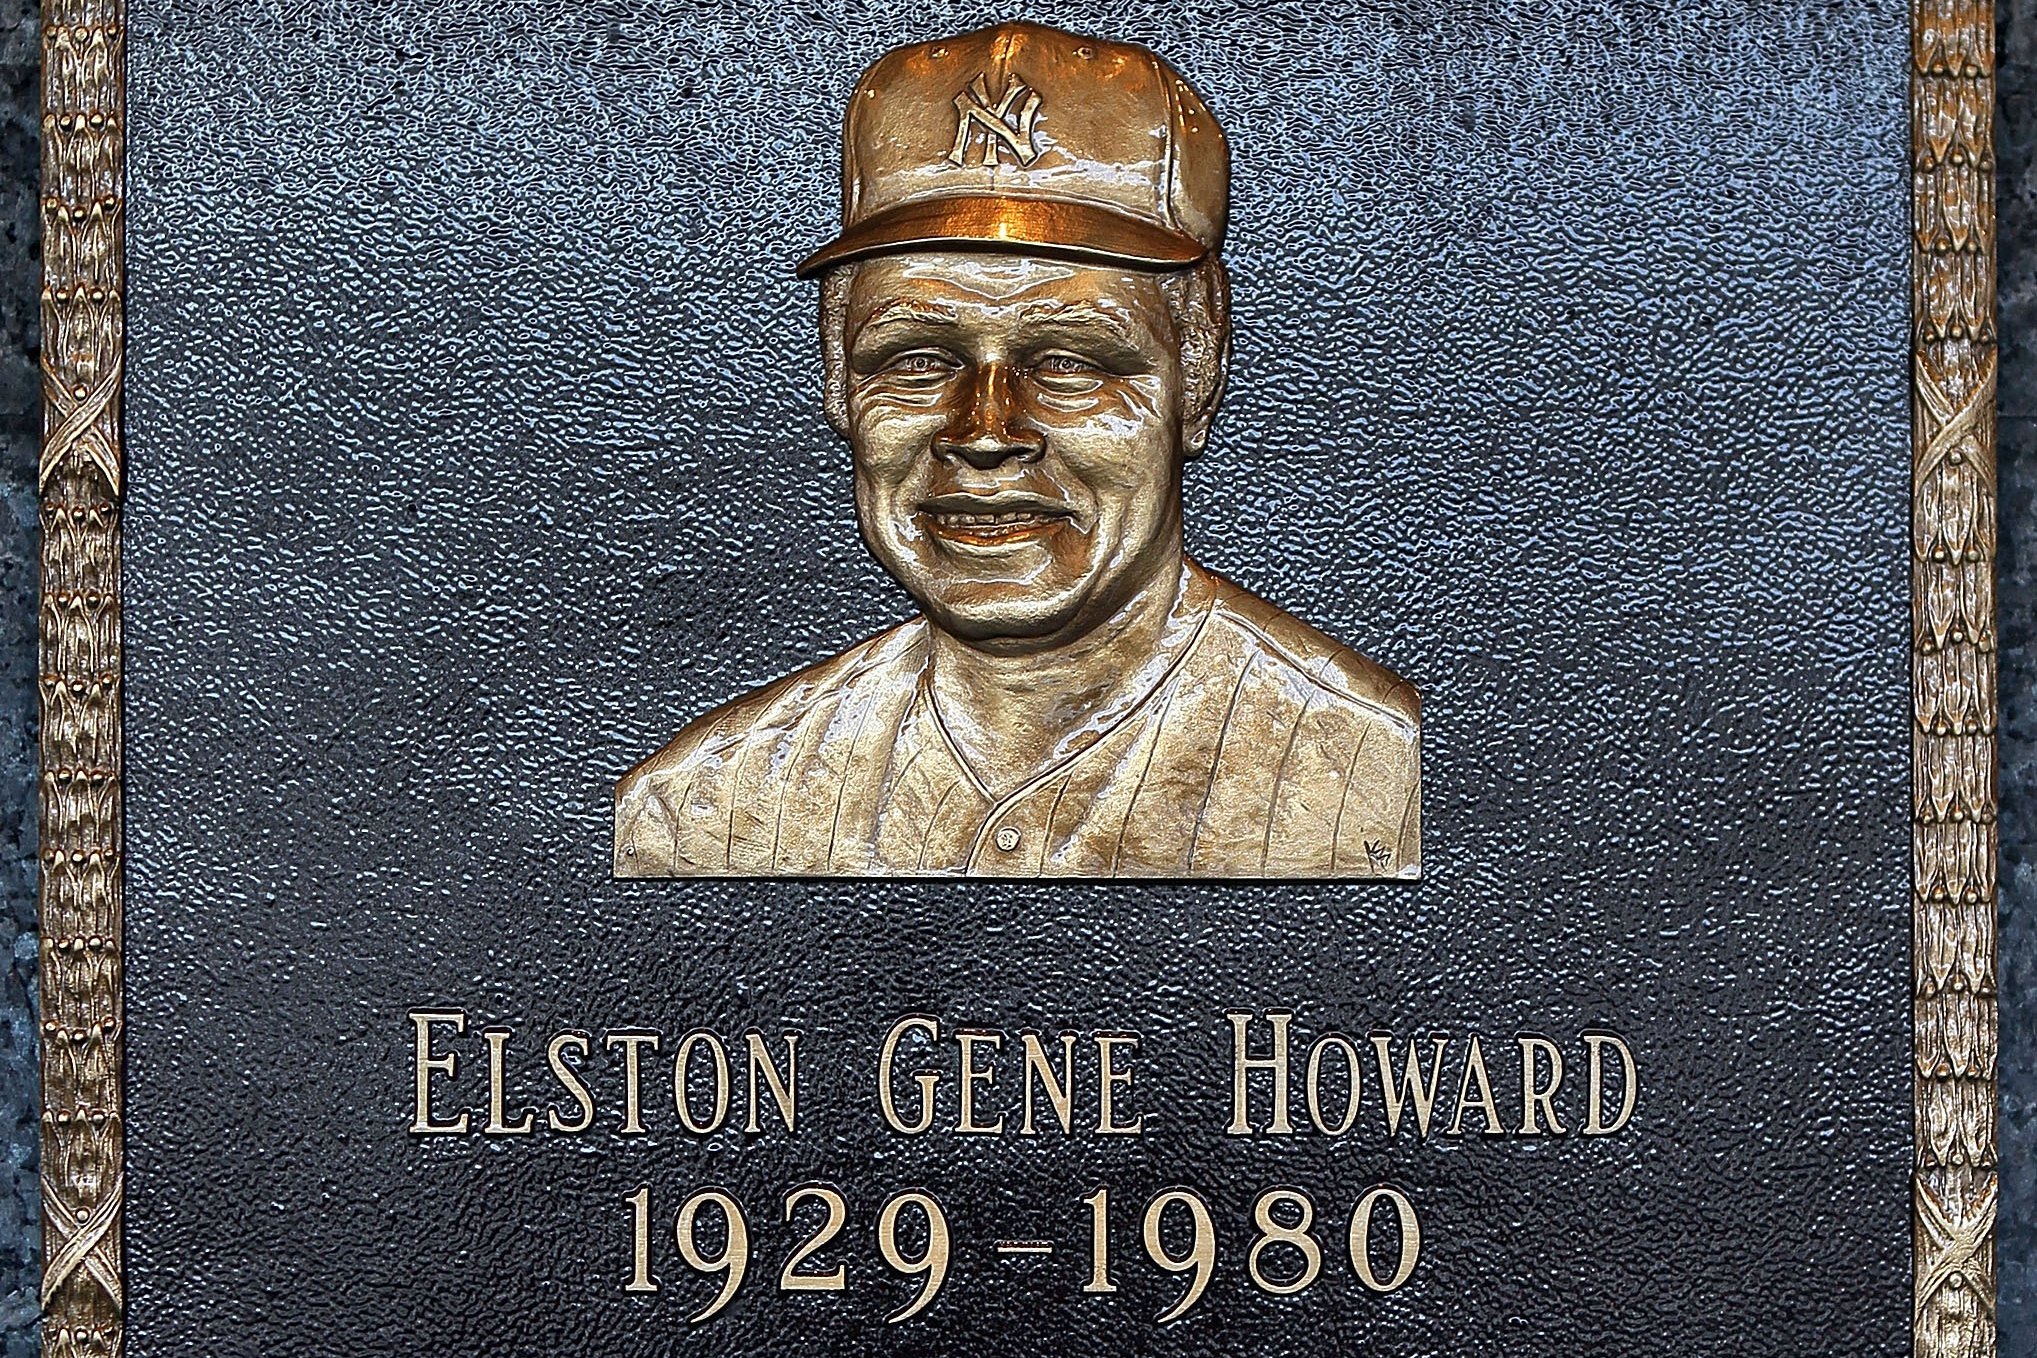 News on January 19, 1966: New York Yankees catcher Elston Howard